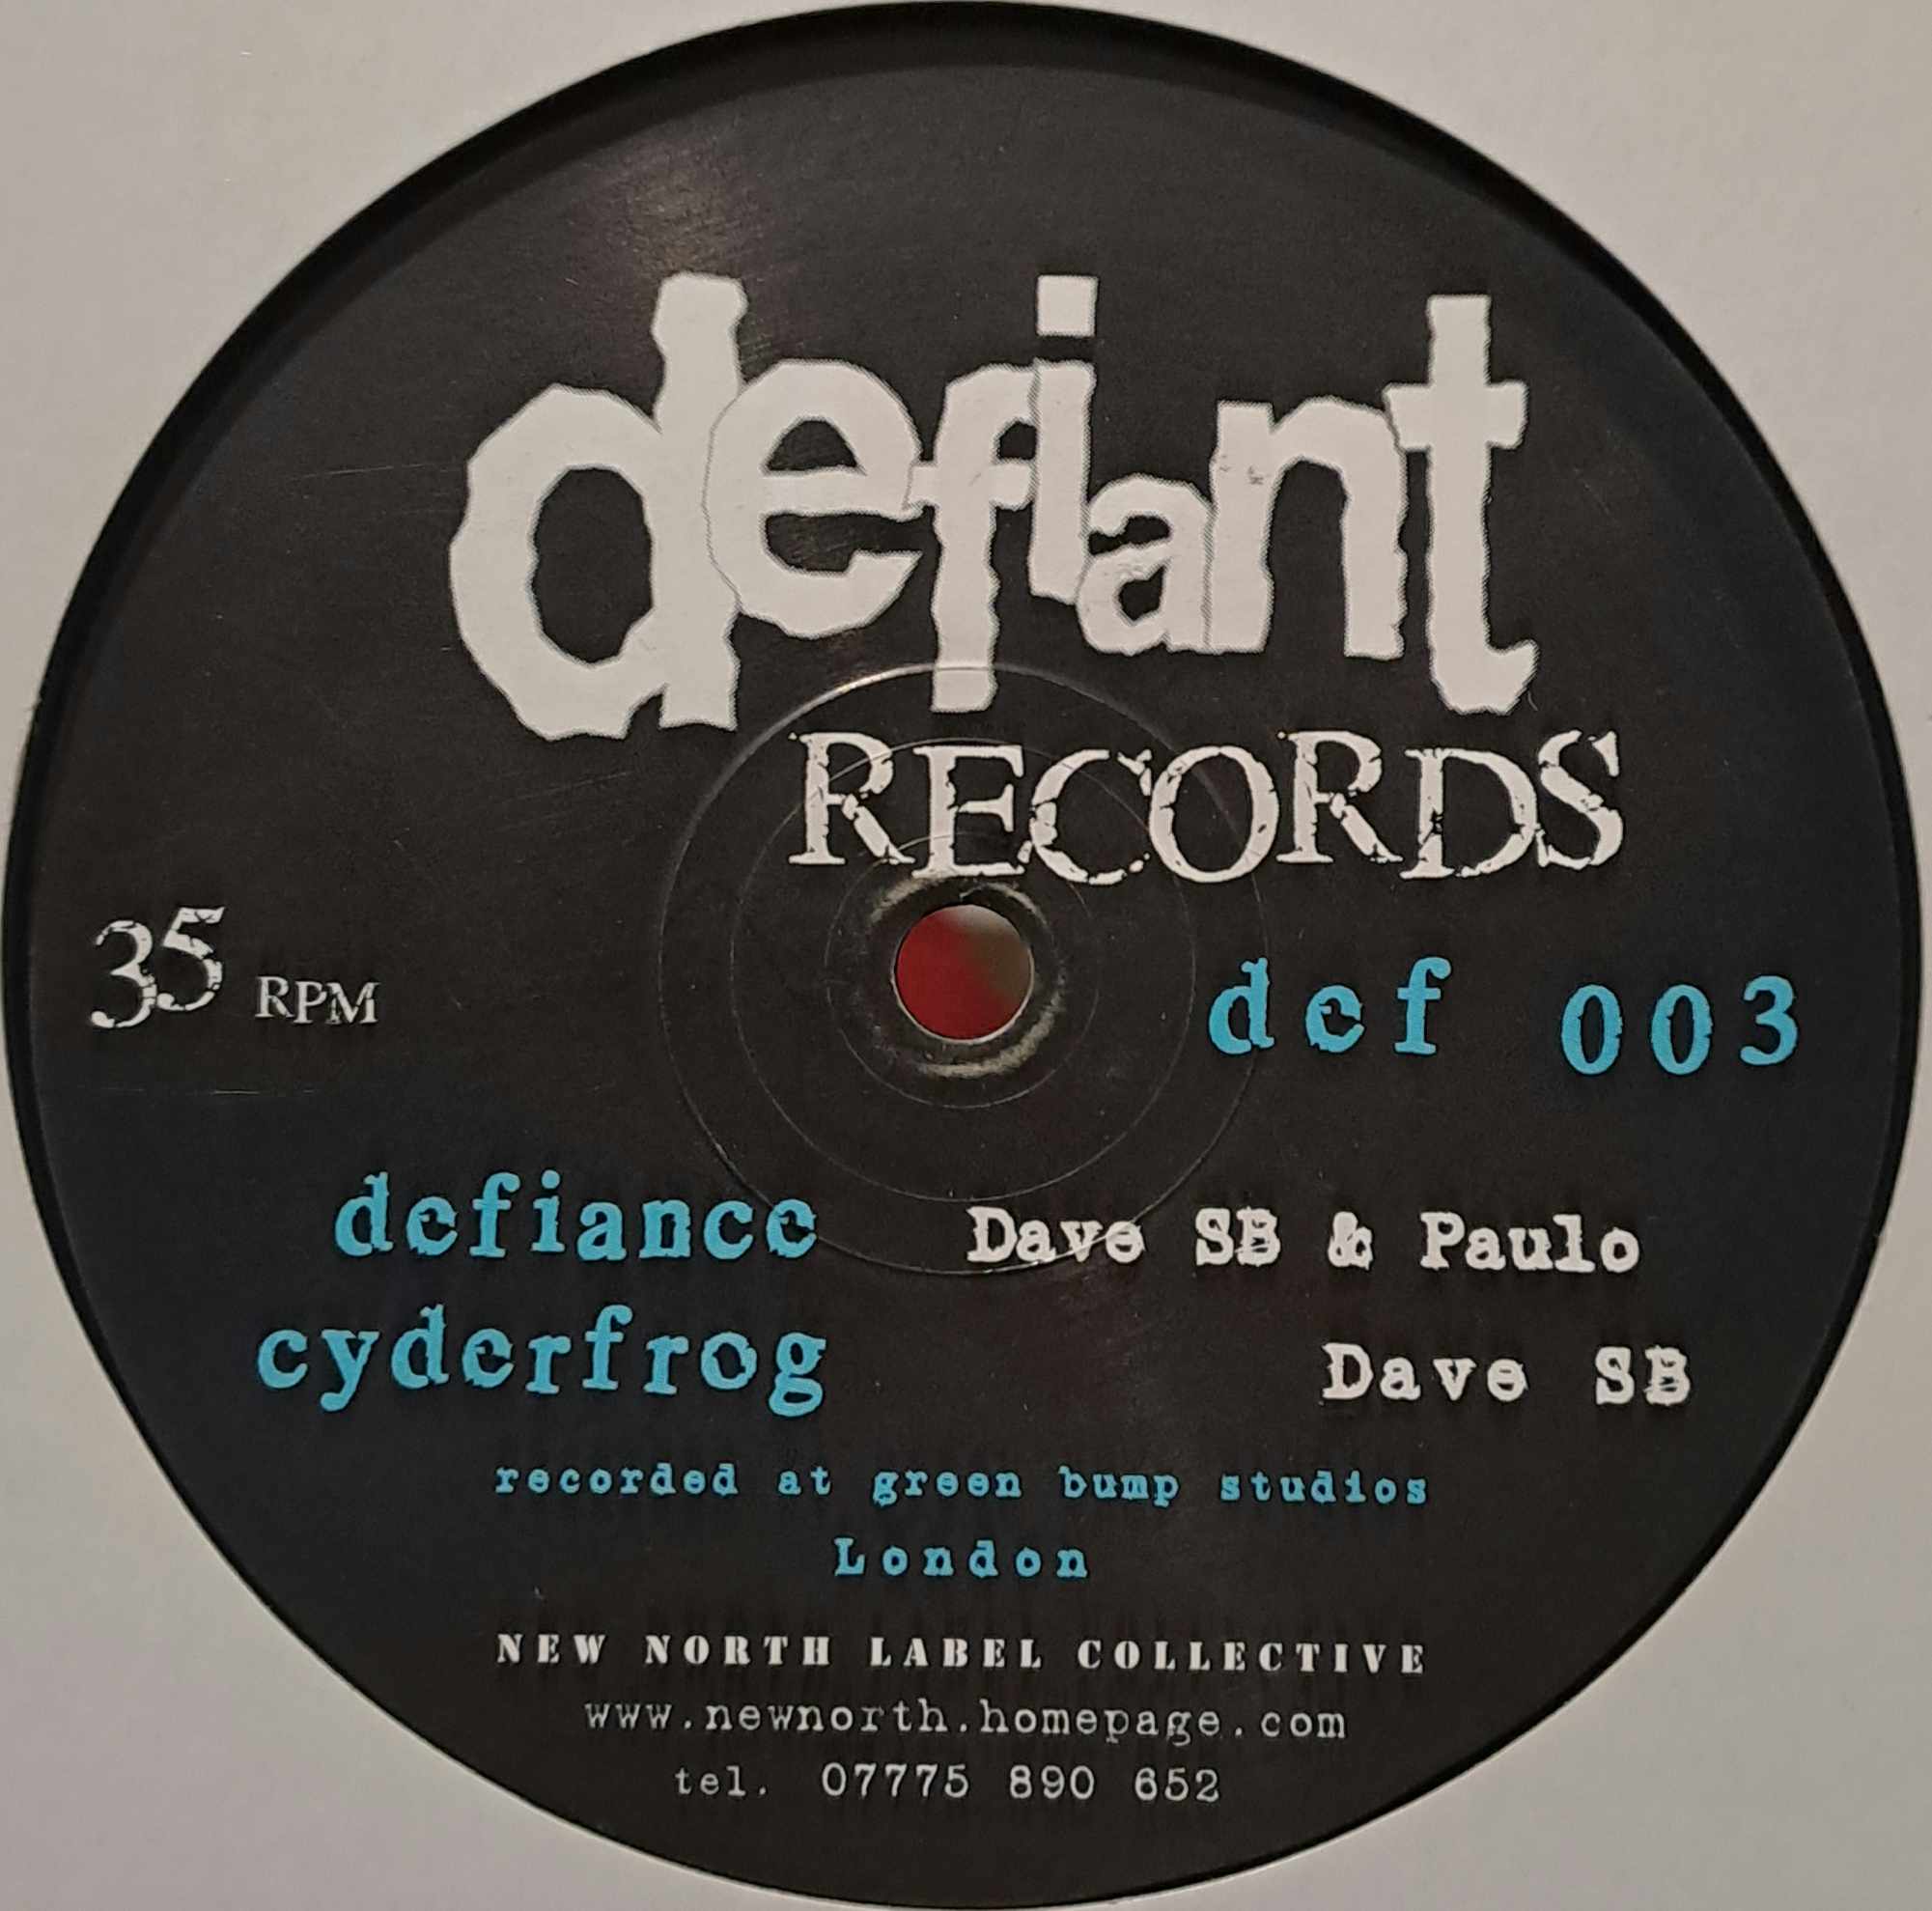 Defiant 003 - vinyle acid